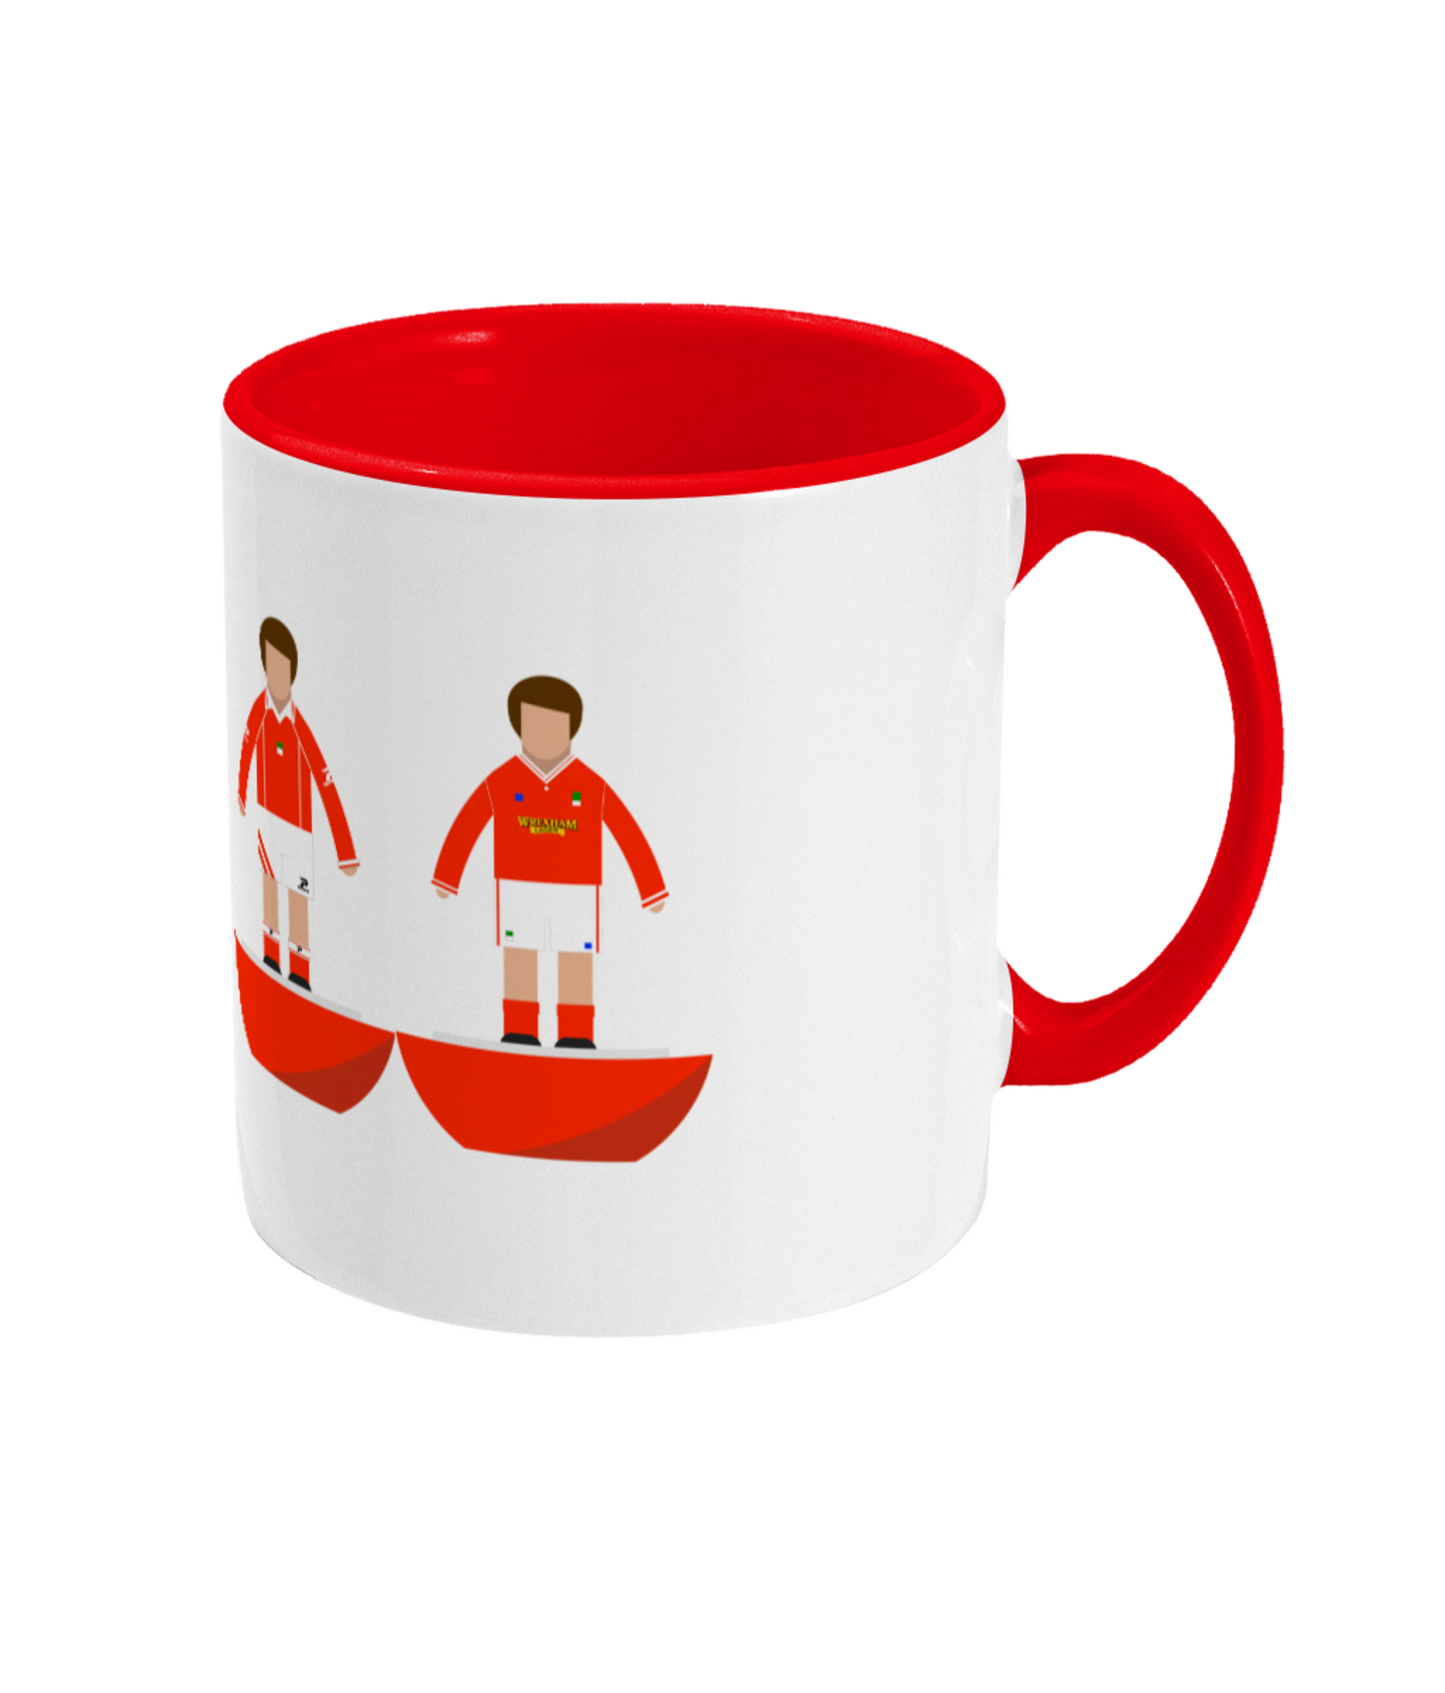 Football Kits 'Wrexham combined' Mug